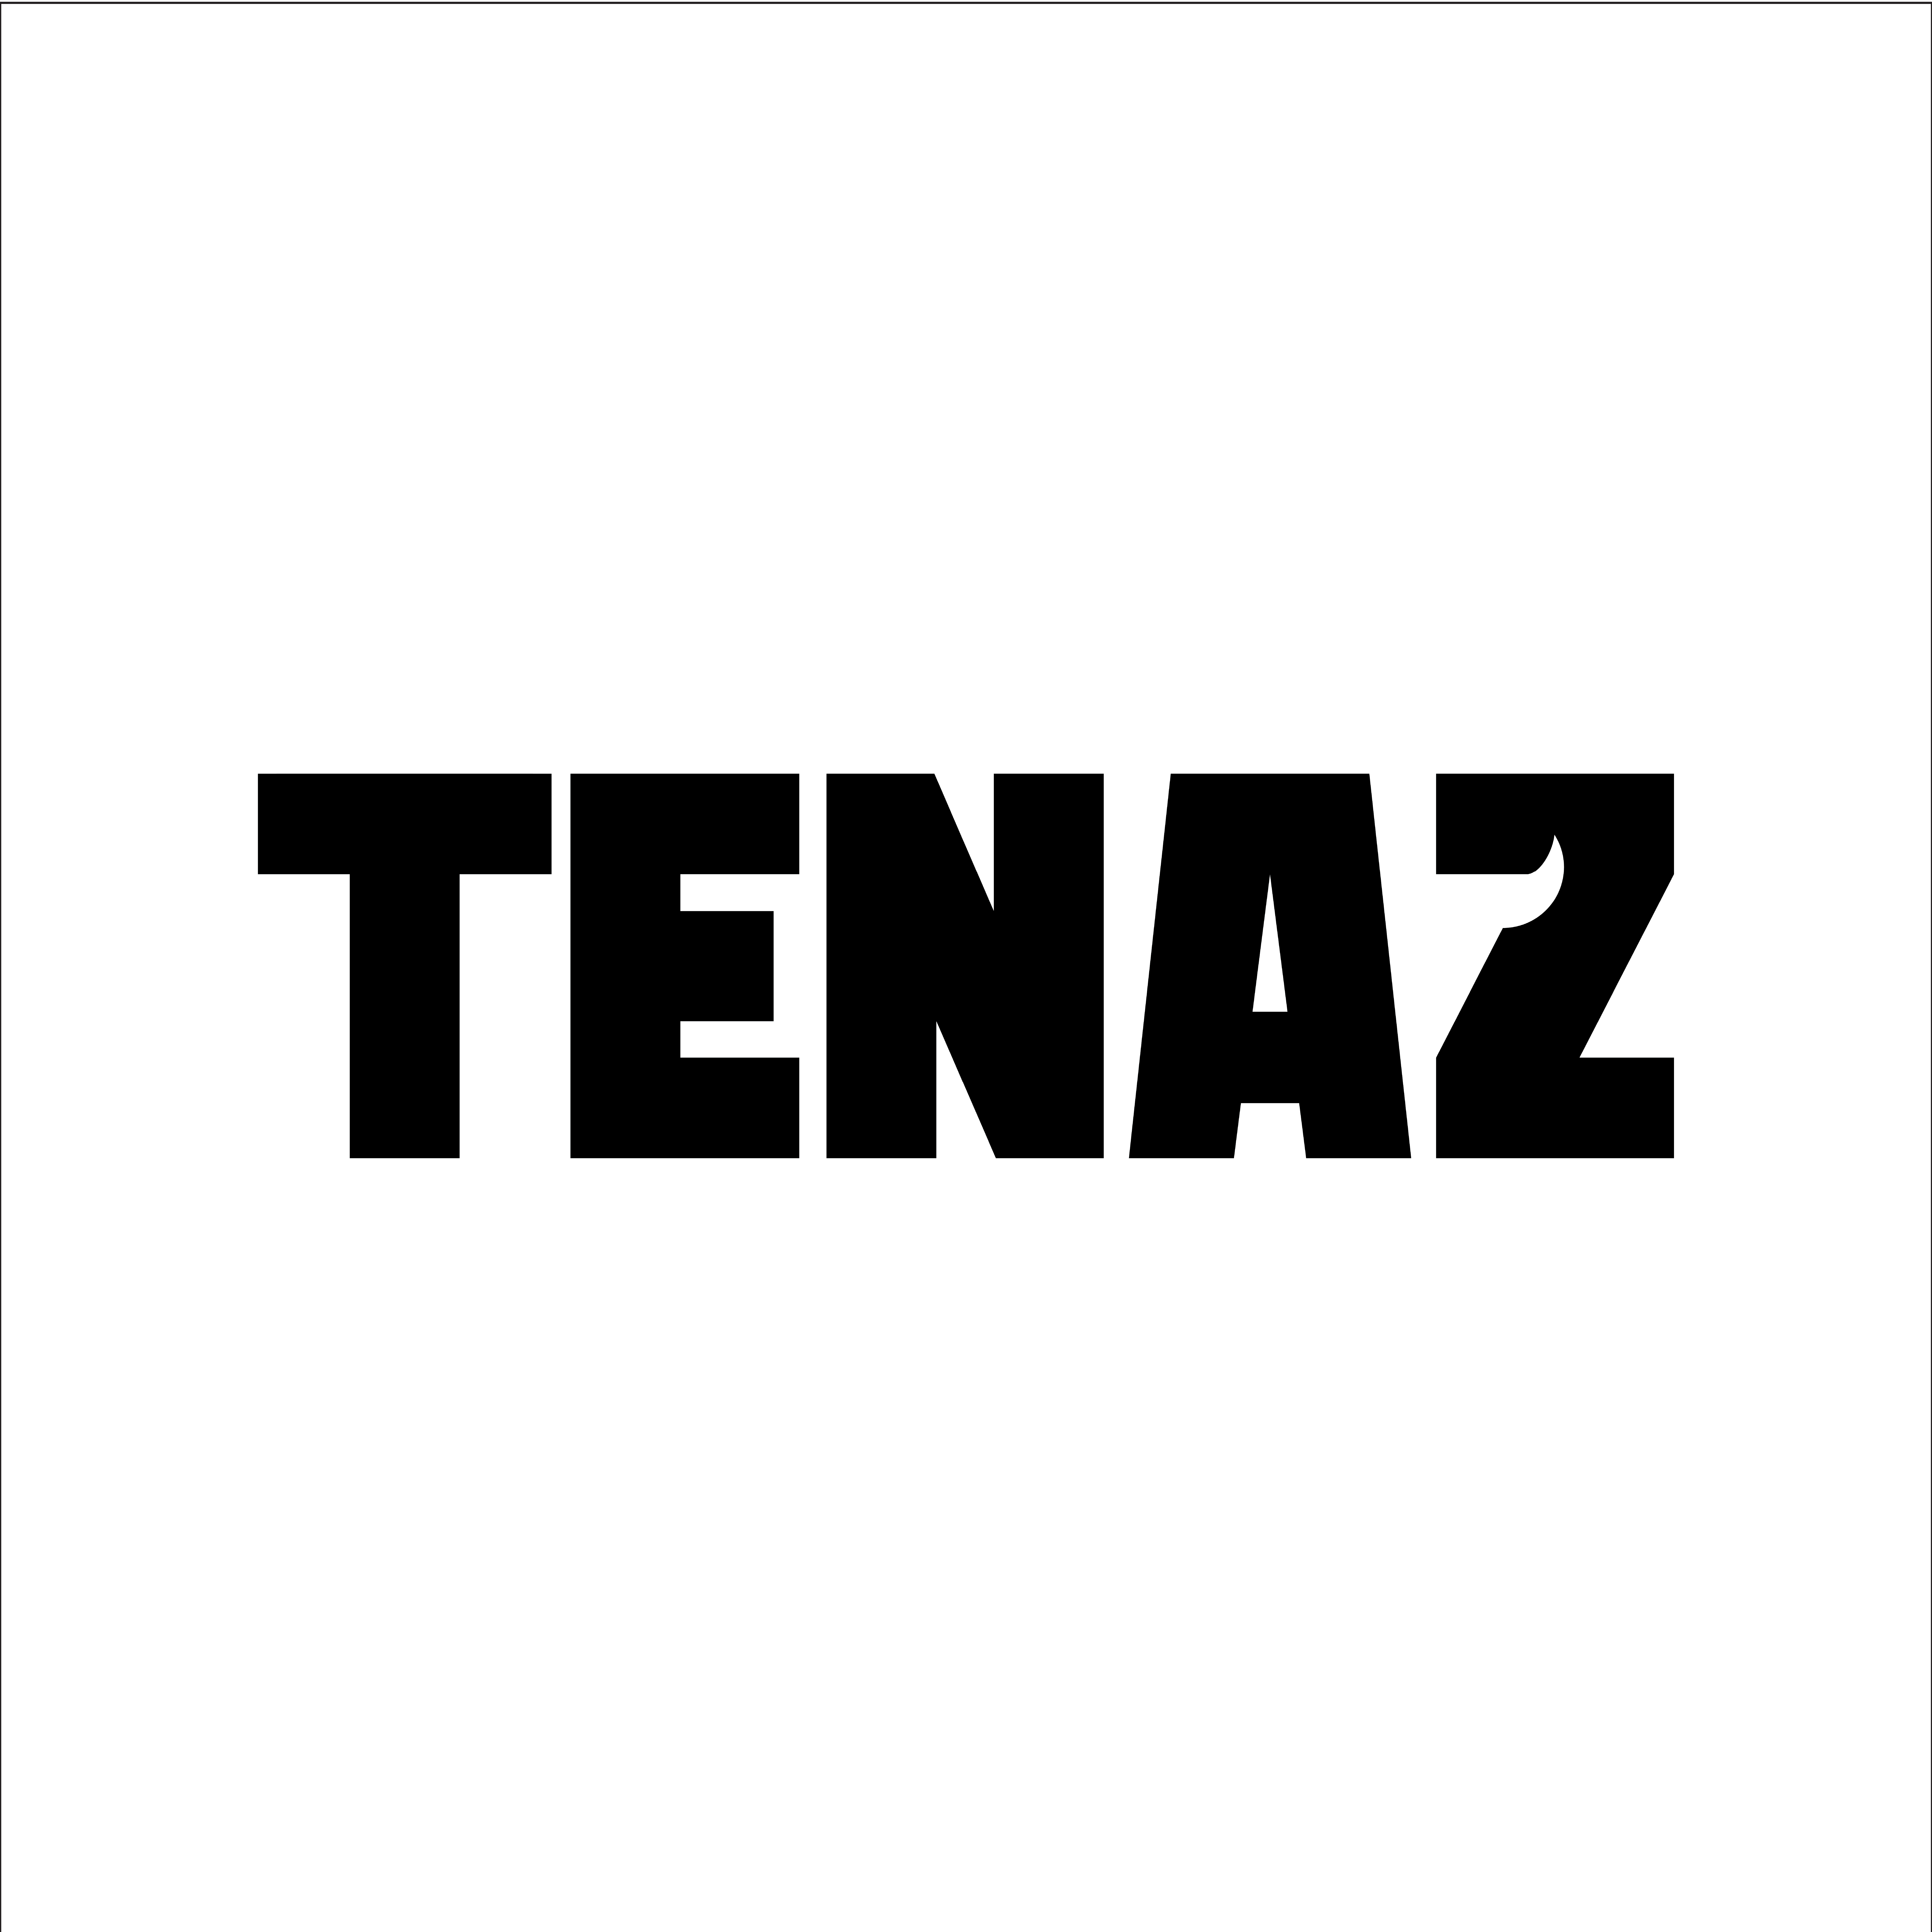 TENAZ Wordmark logo design by logo designer DSR Branding for your inspiration and for the worlds largest logo competition